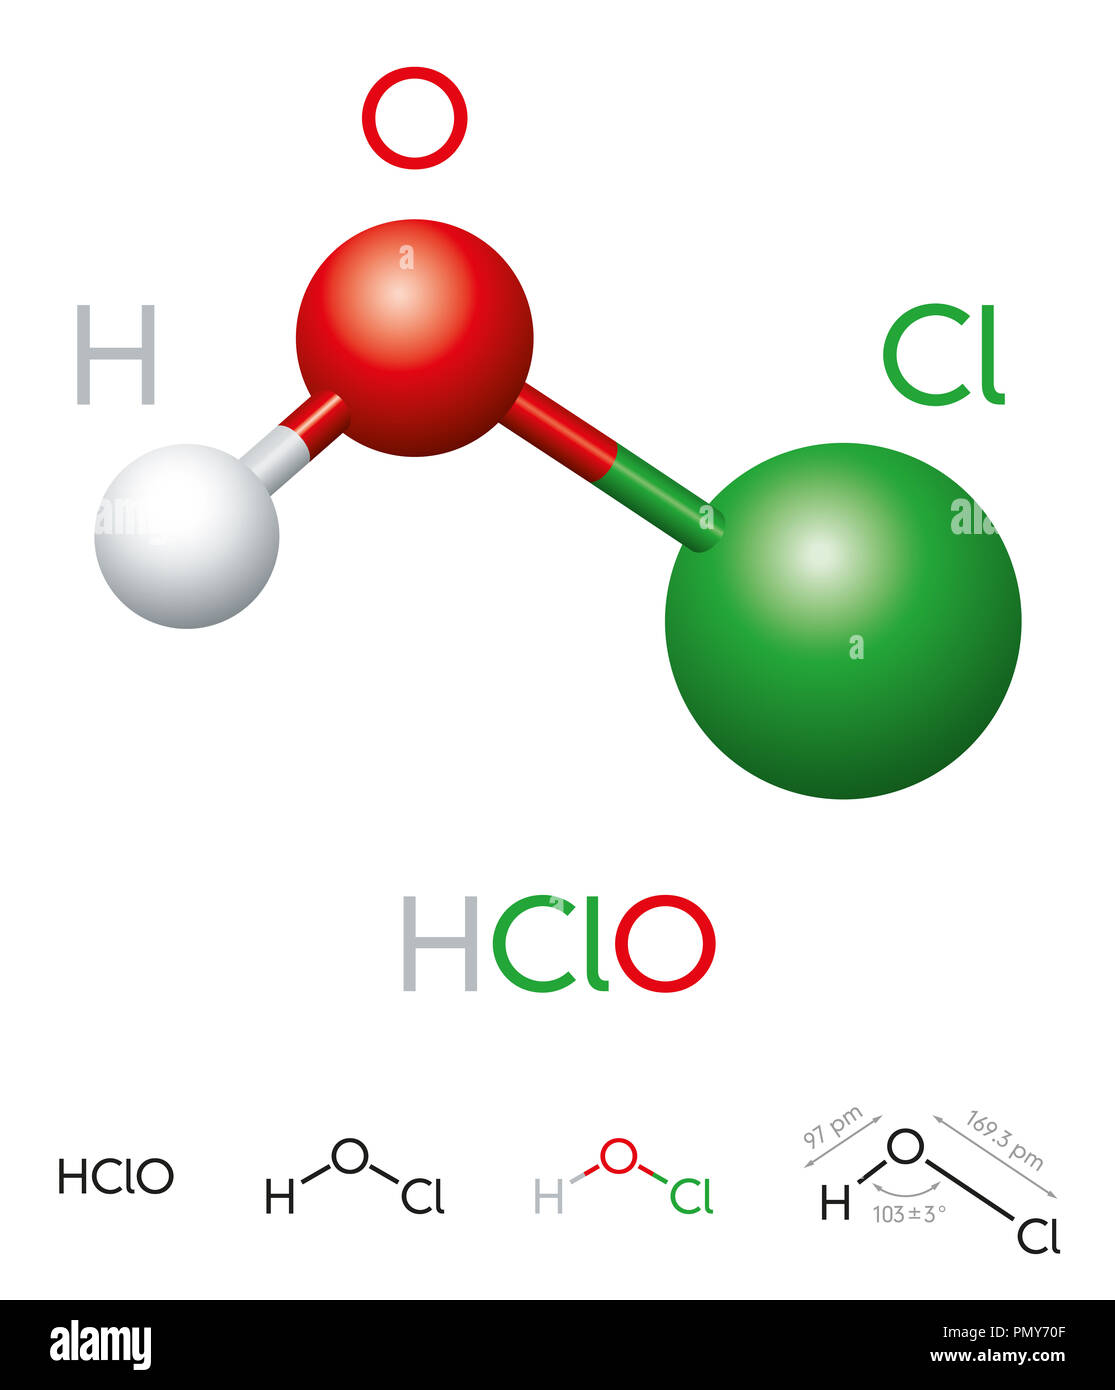 HClO. Hypochlorous acid. Molecule model, chemical formula, ball-and-stick model, geometric structure and structural formula. Weak acid. Illustration. Stock Photo